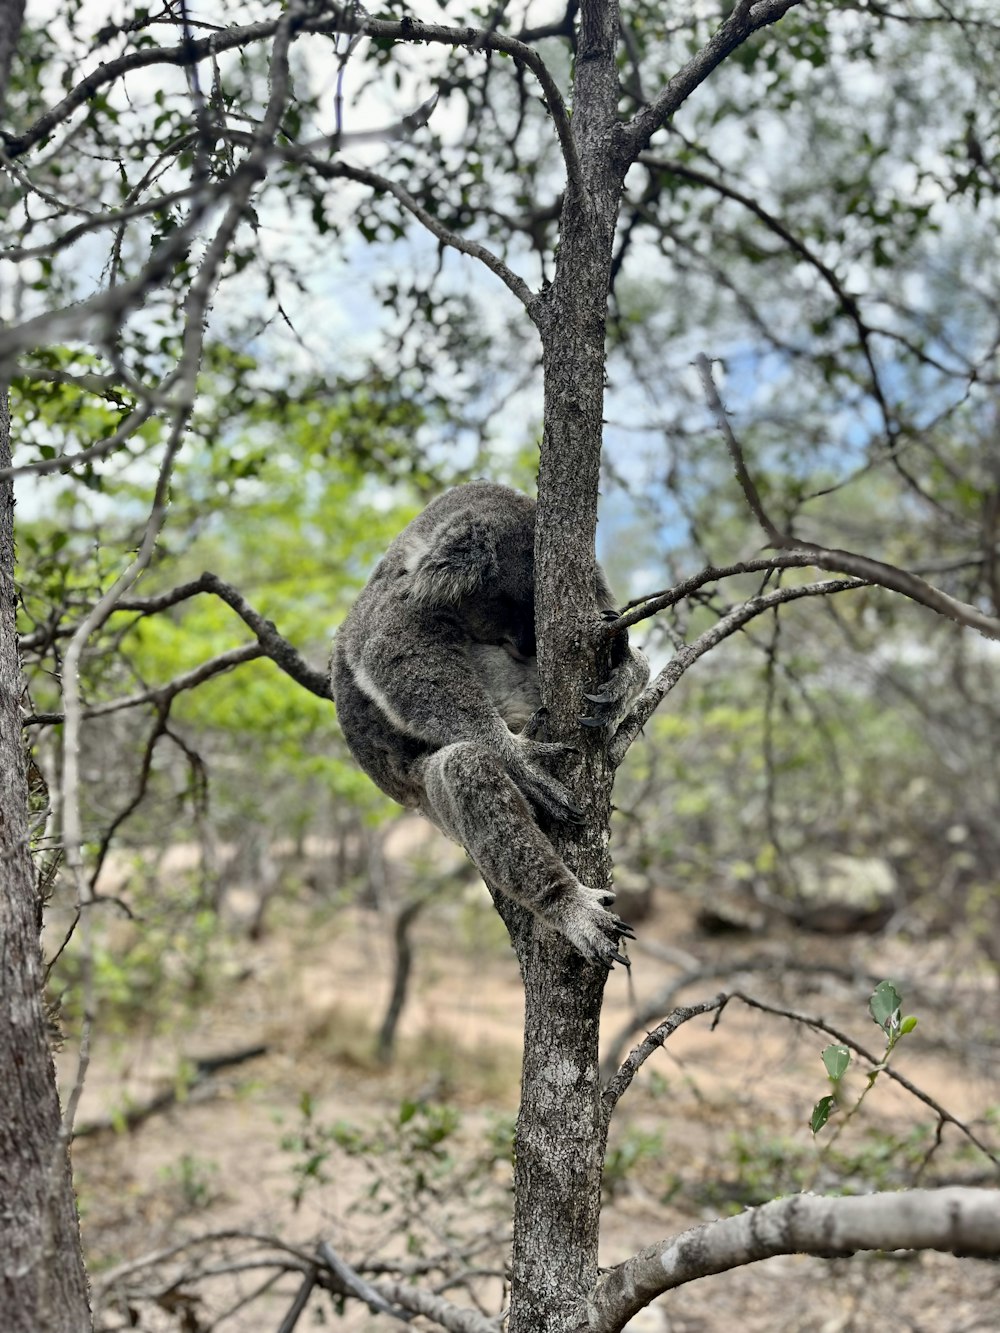 a koala climbing a tree in the wild